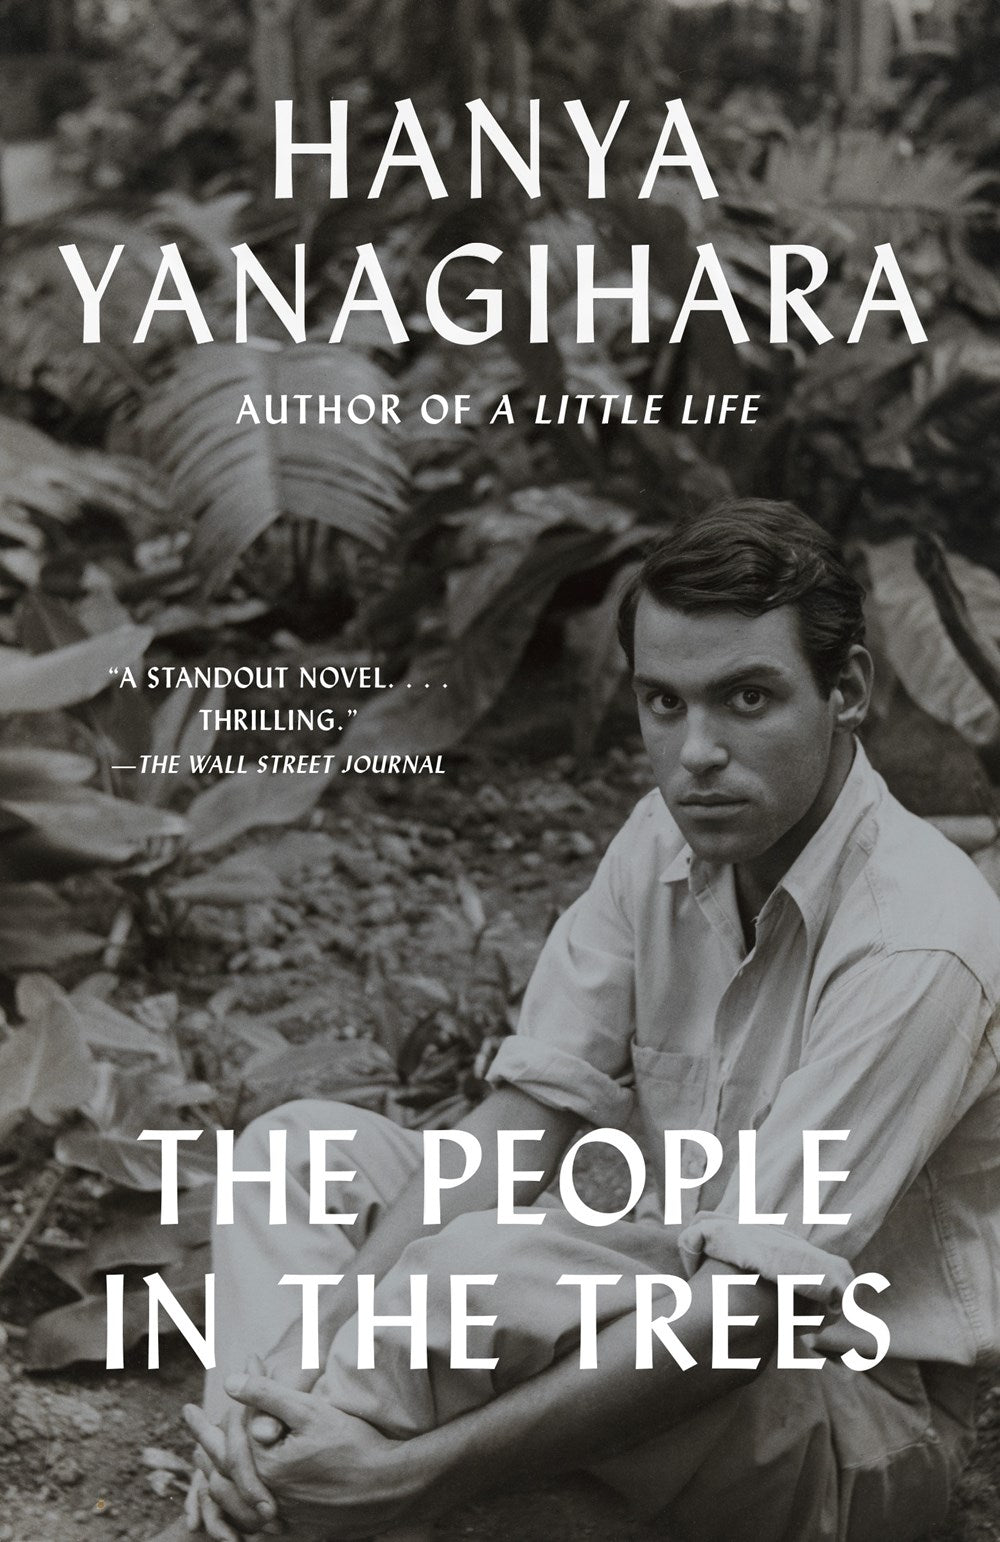 The People in the Trees: A Novel by Hanya Yanagihara